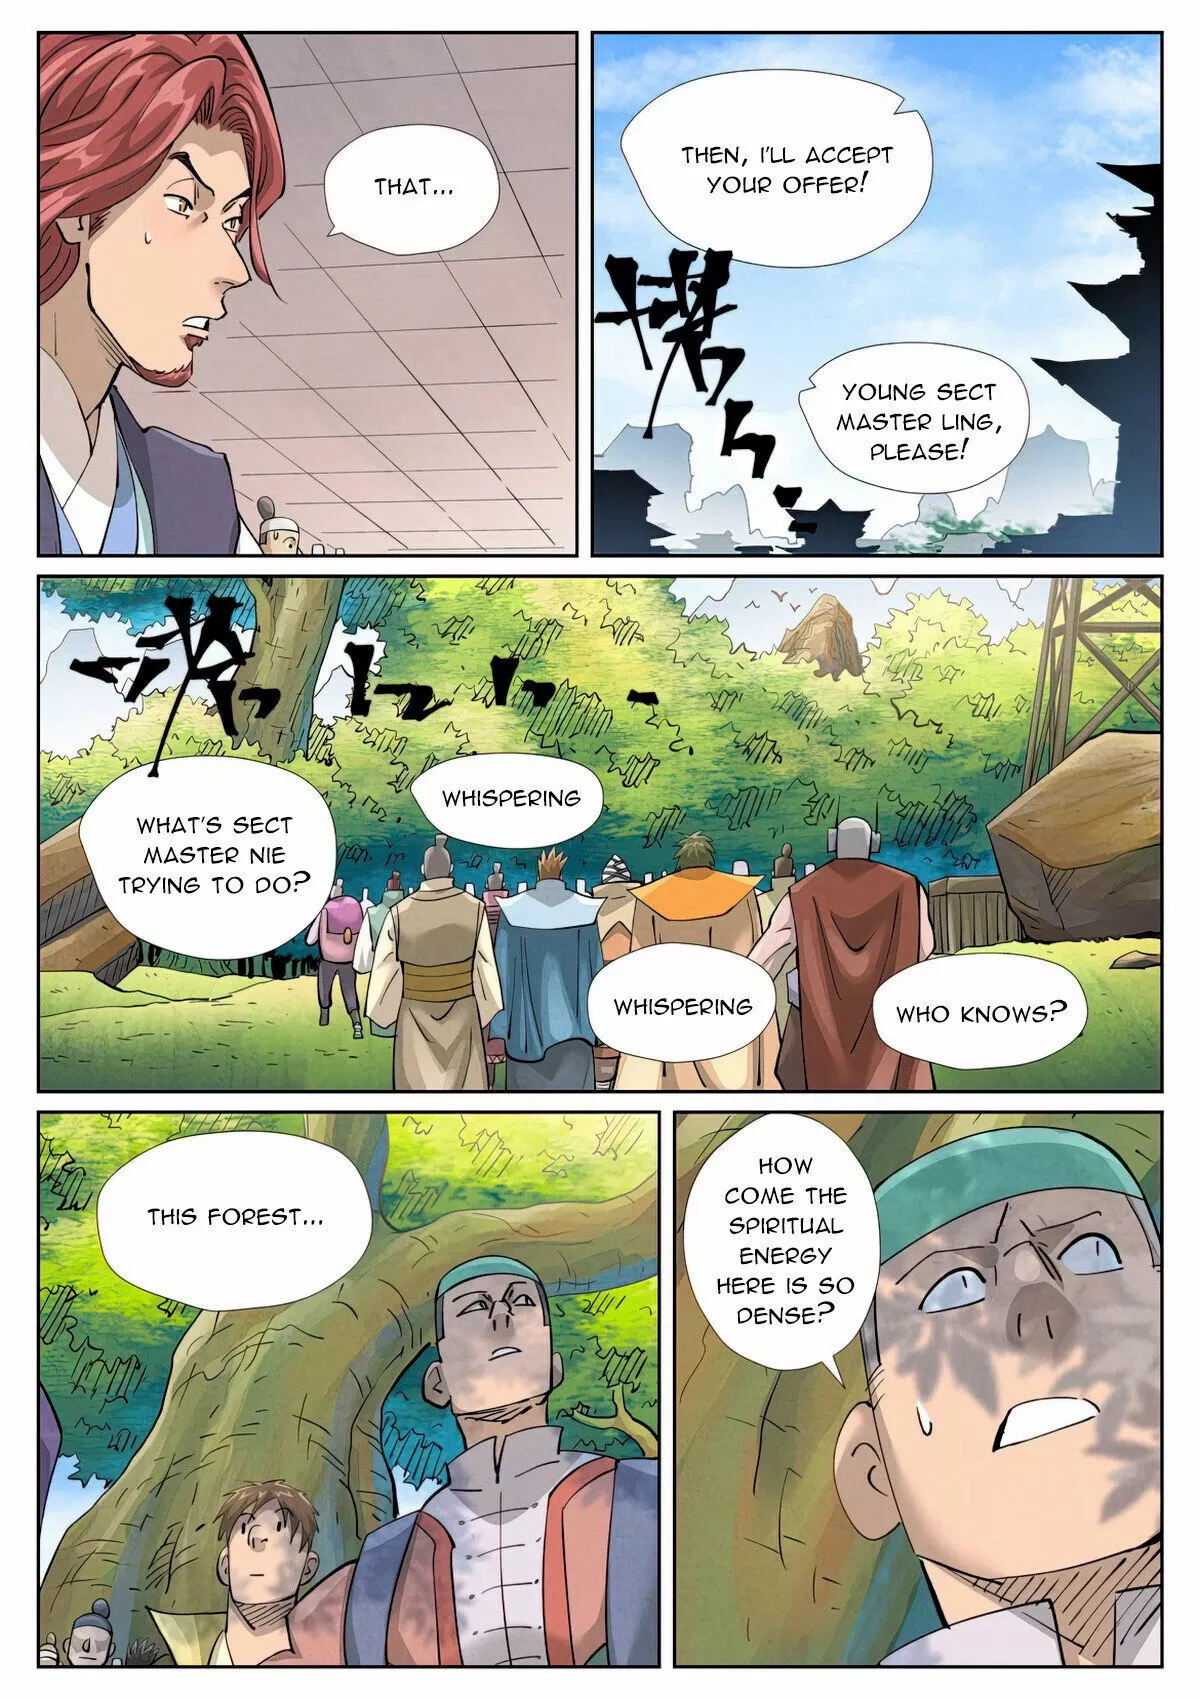 Tales Of Demons And Gods Chapter 430.6 page 4 - Mangakakalot